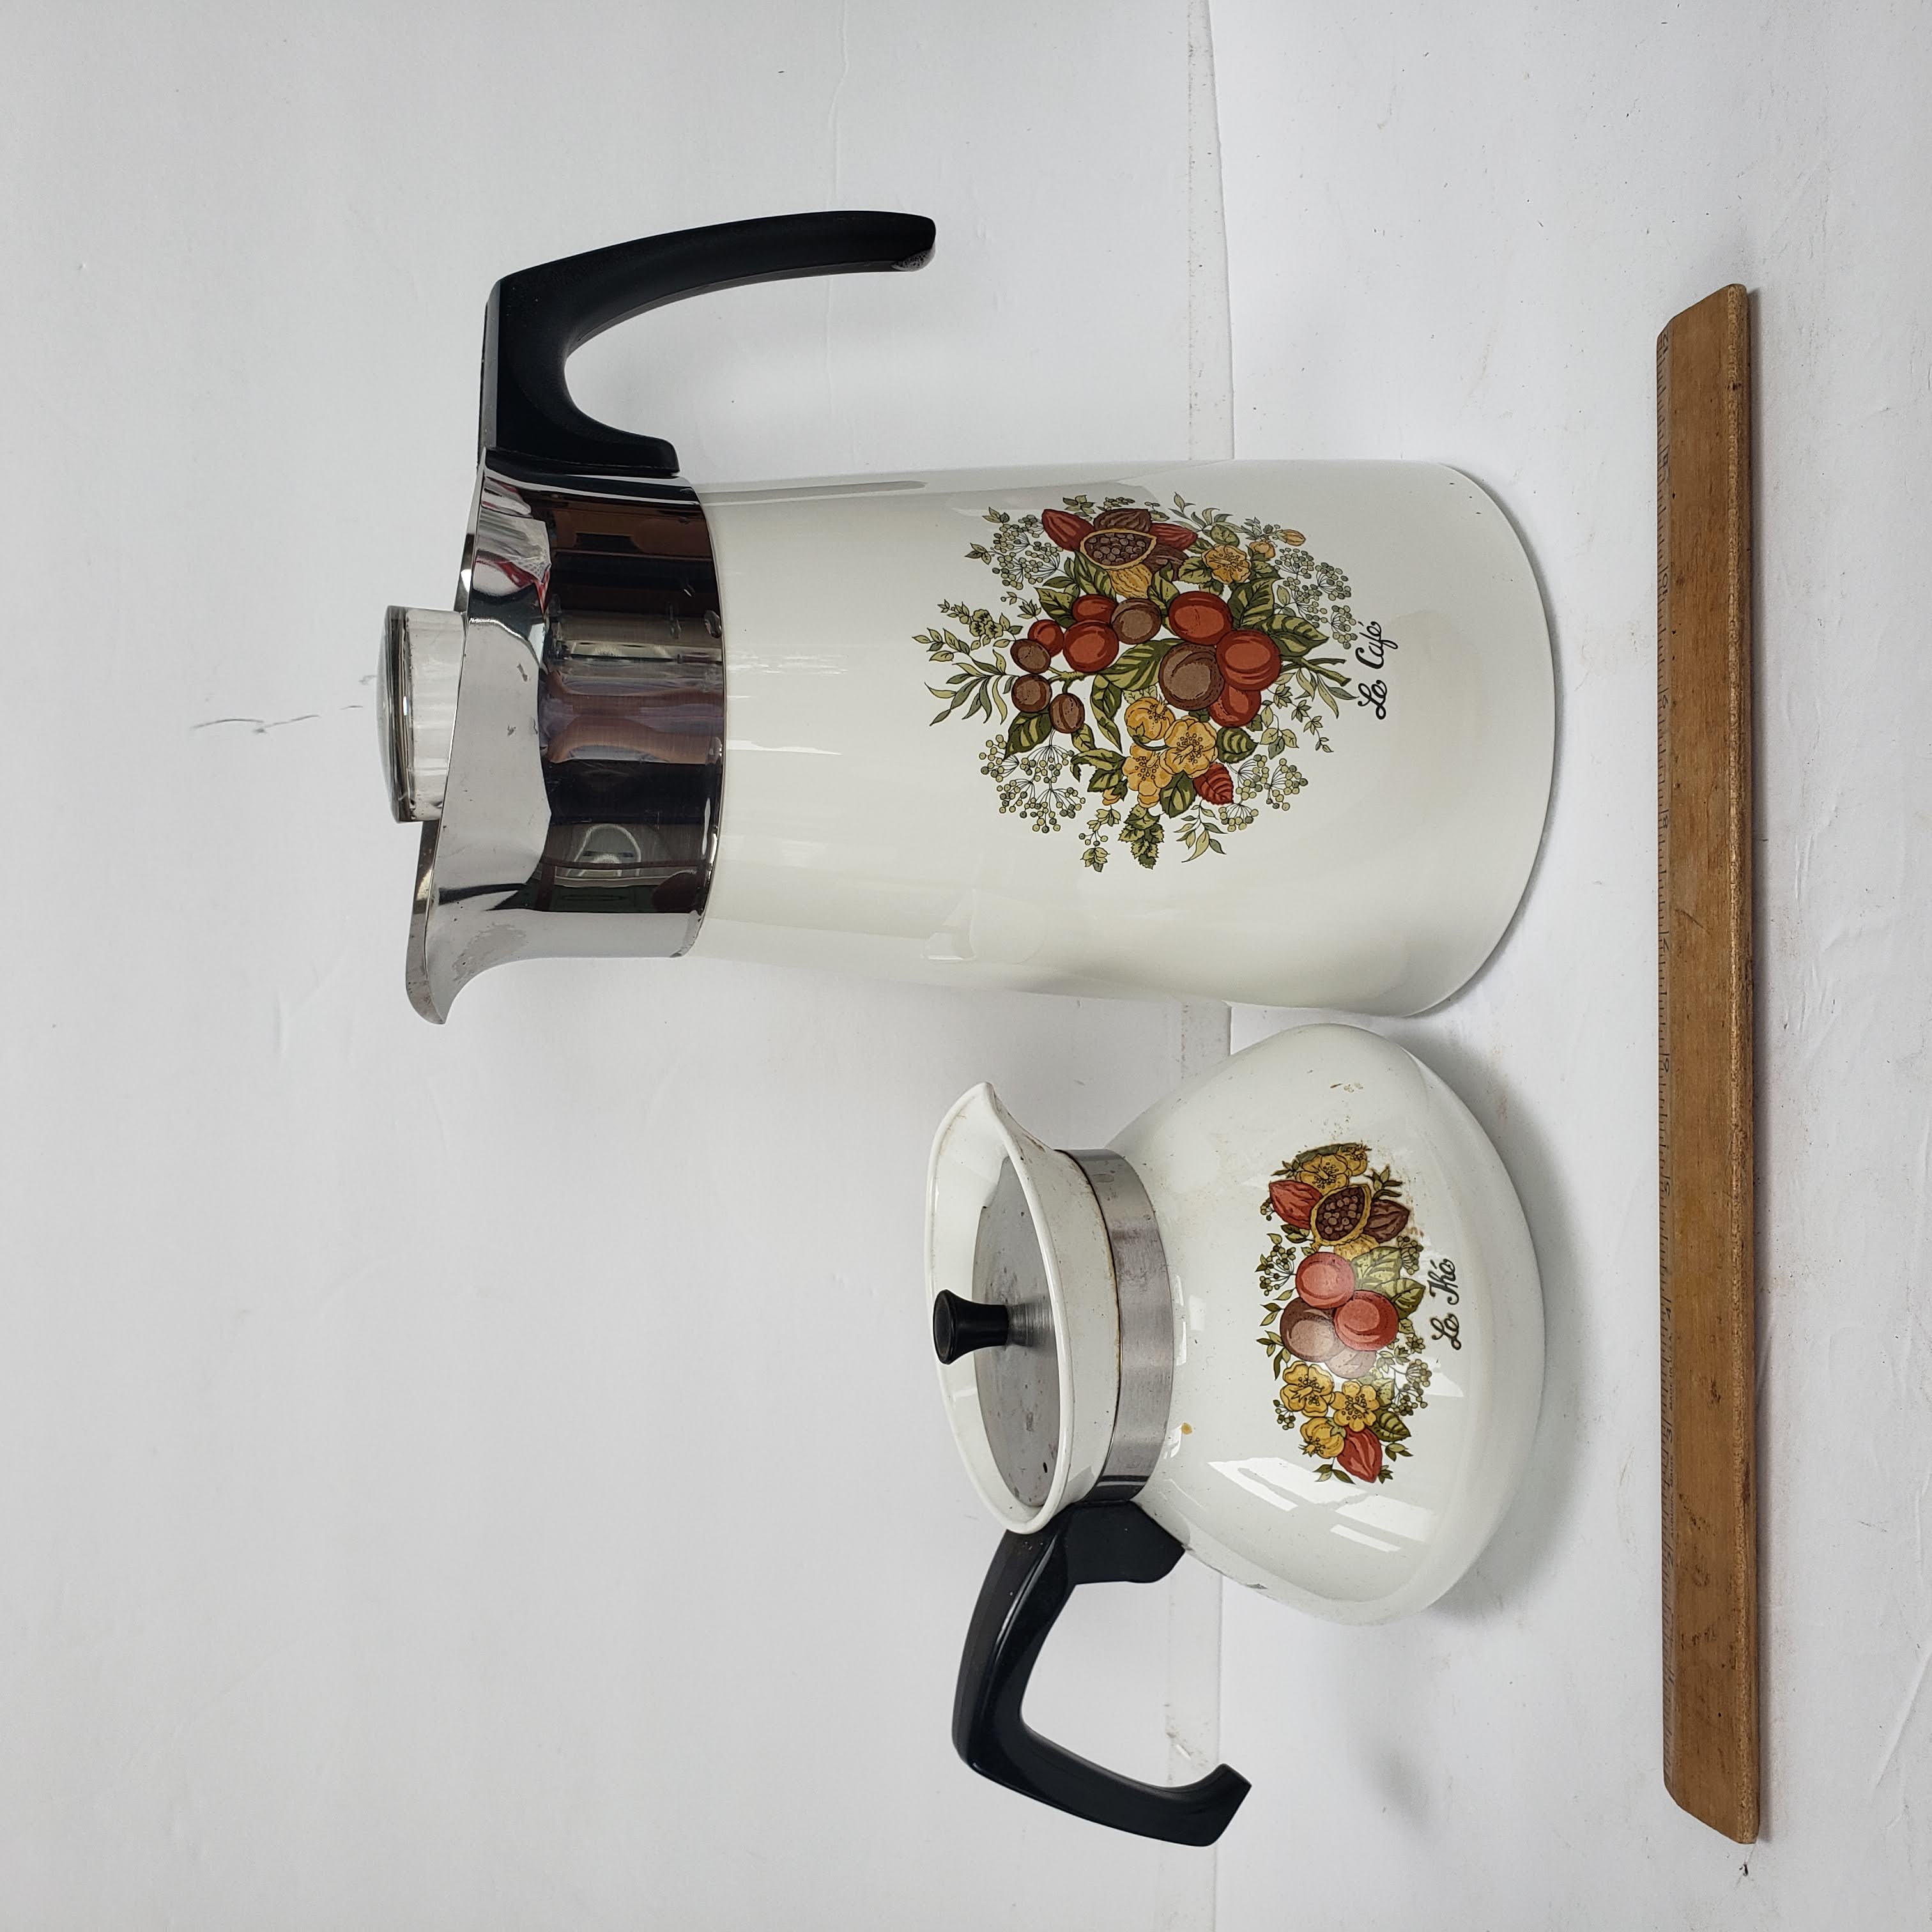 Corning Ware Vintage Coffee Percolator Pot